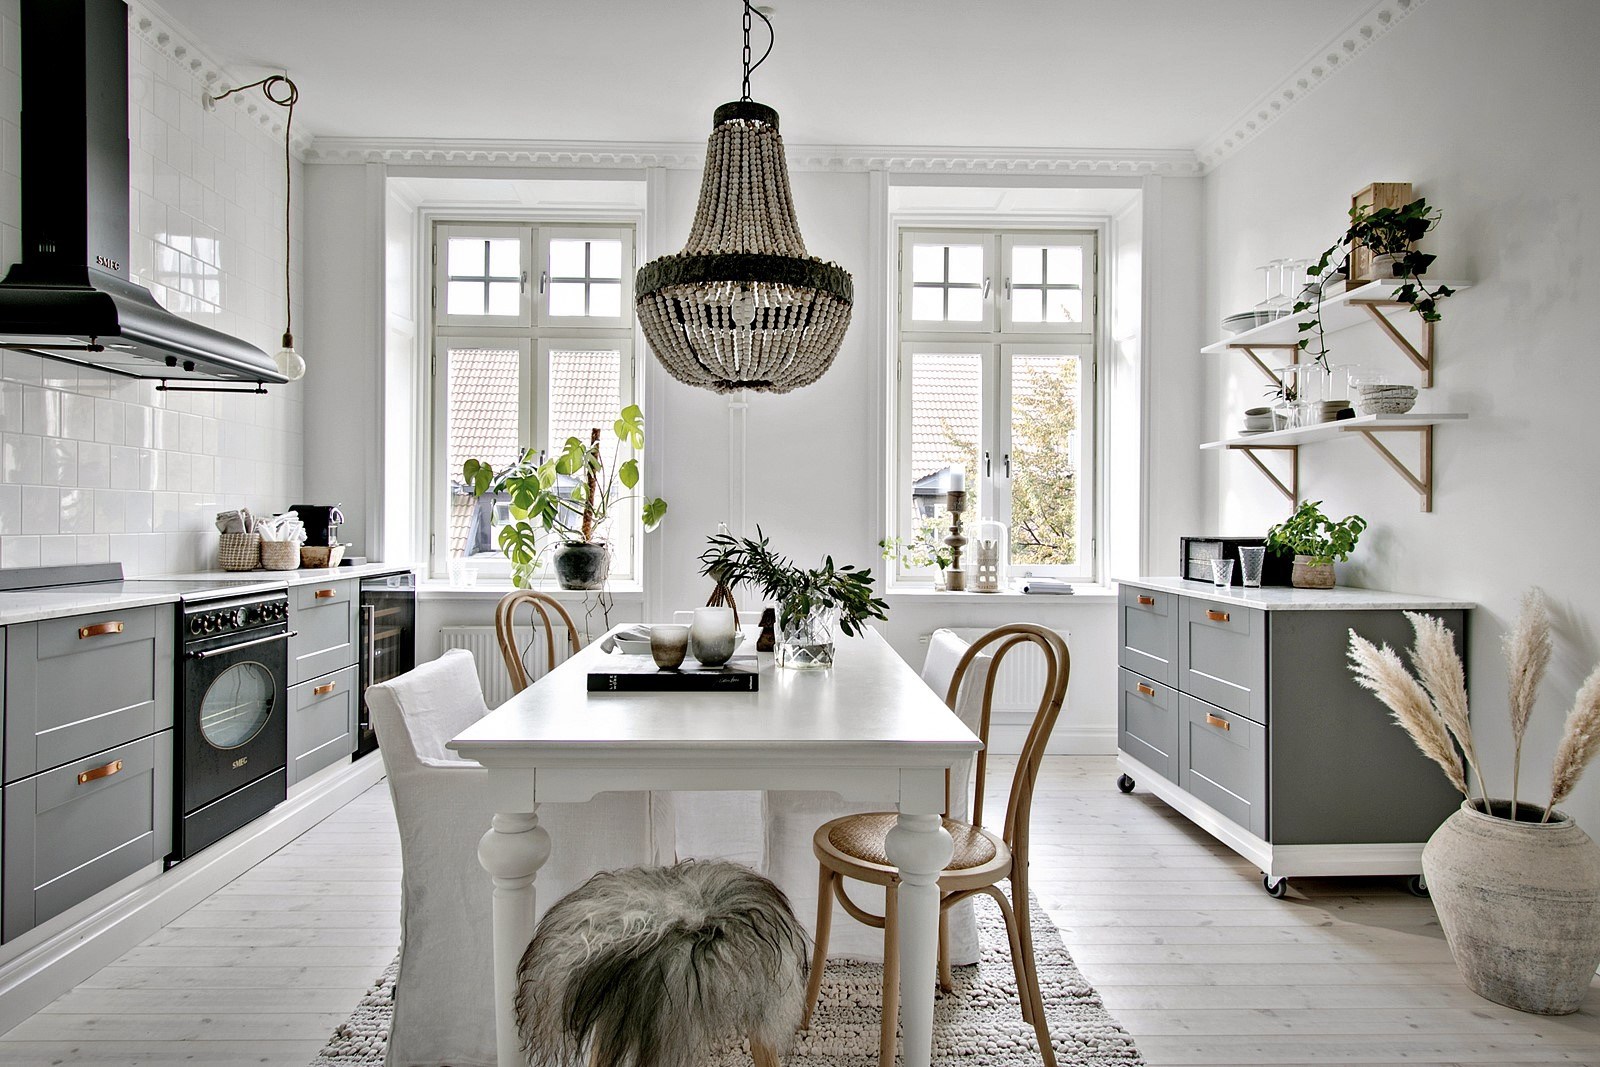 A dreamy Nordic apartment